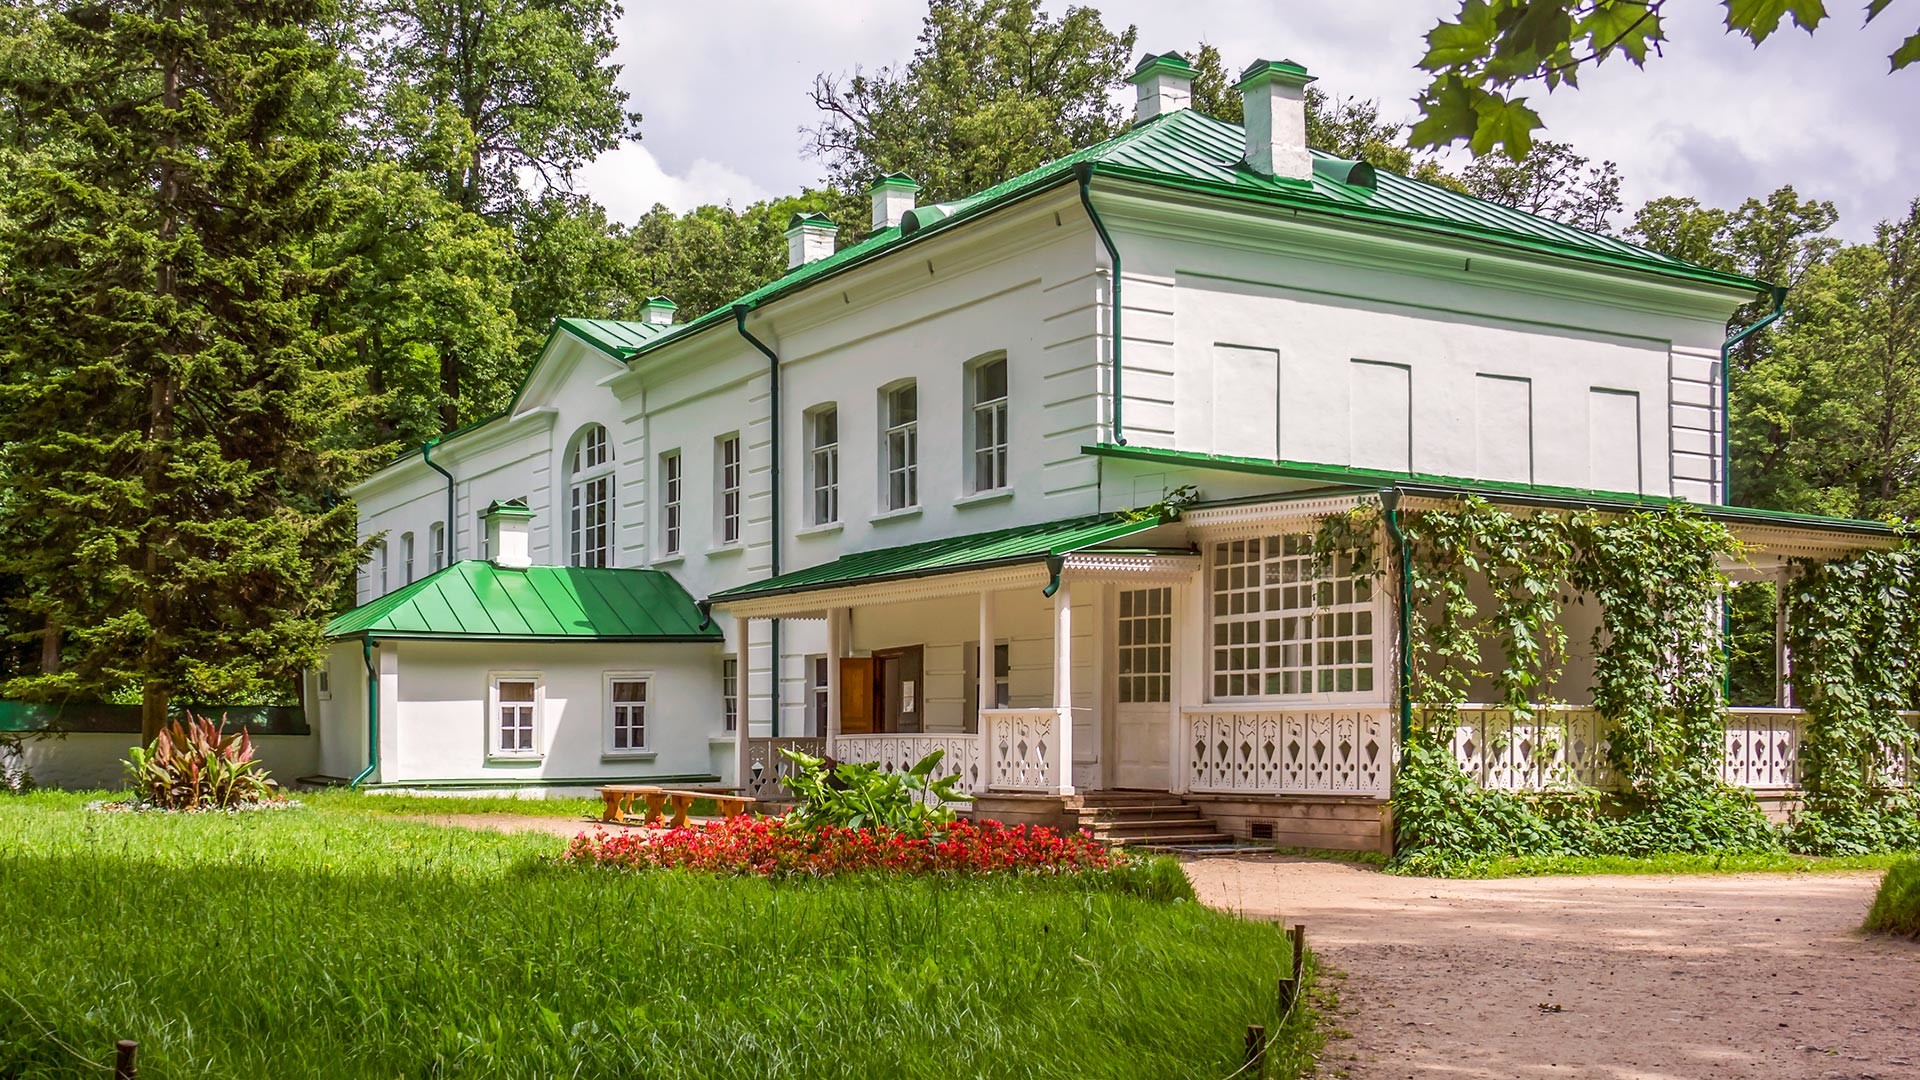 Tolstoy's house in Yasnaya Polyana